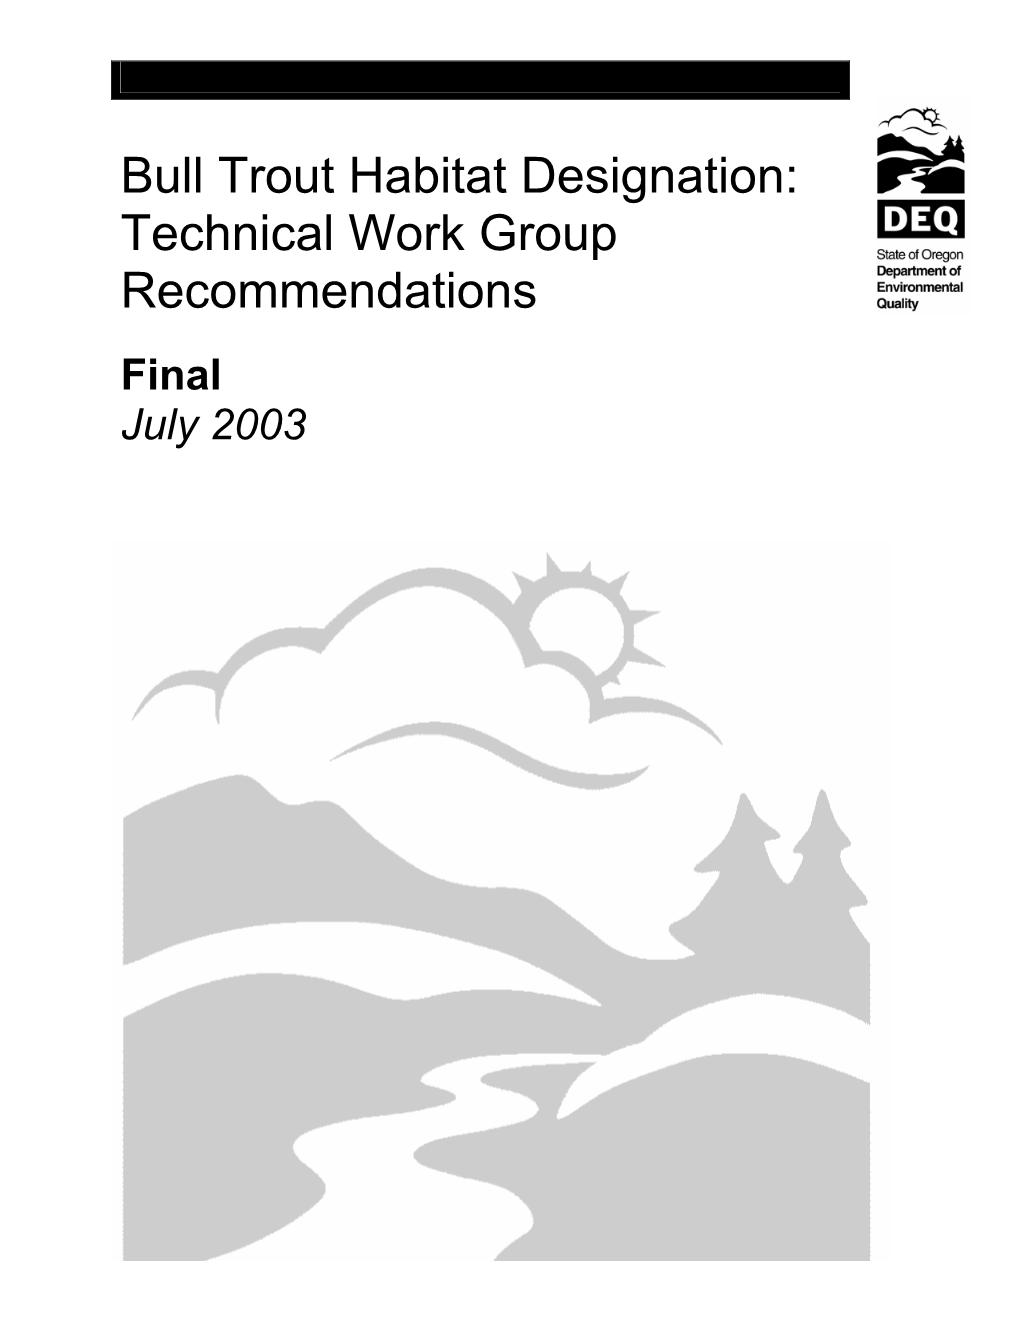 Bull Trout Habitat Designation: Technical Work Group Recommendations